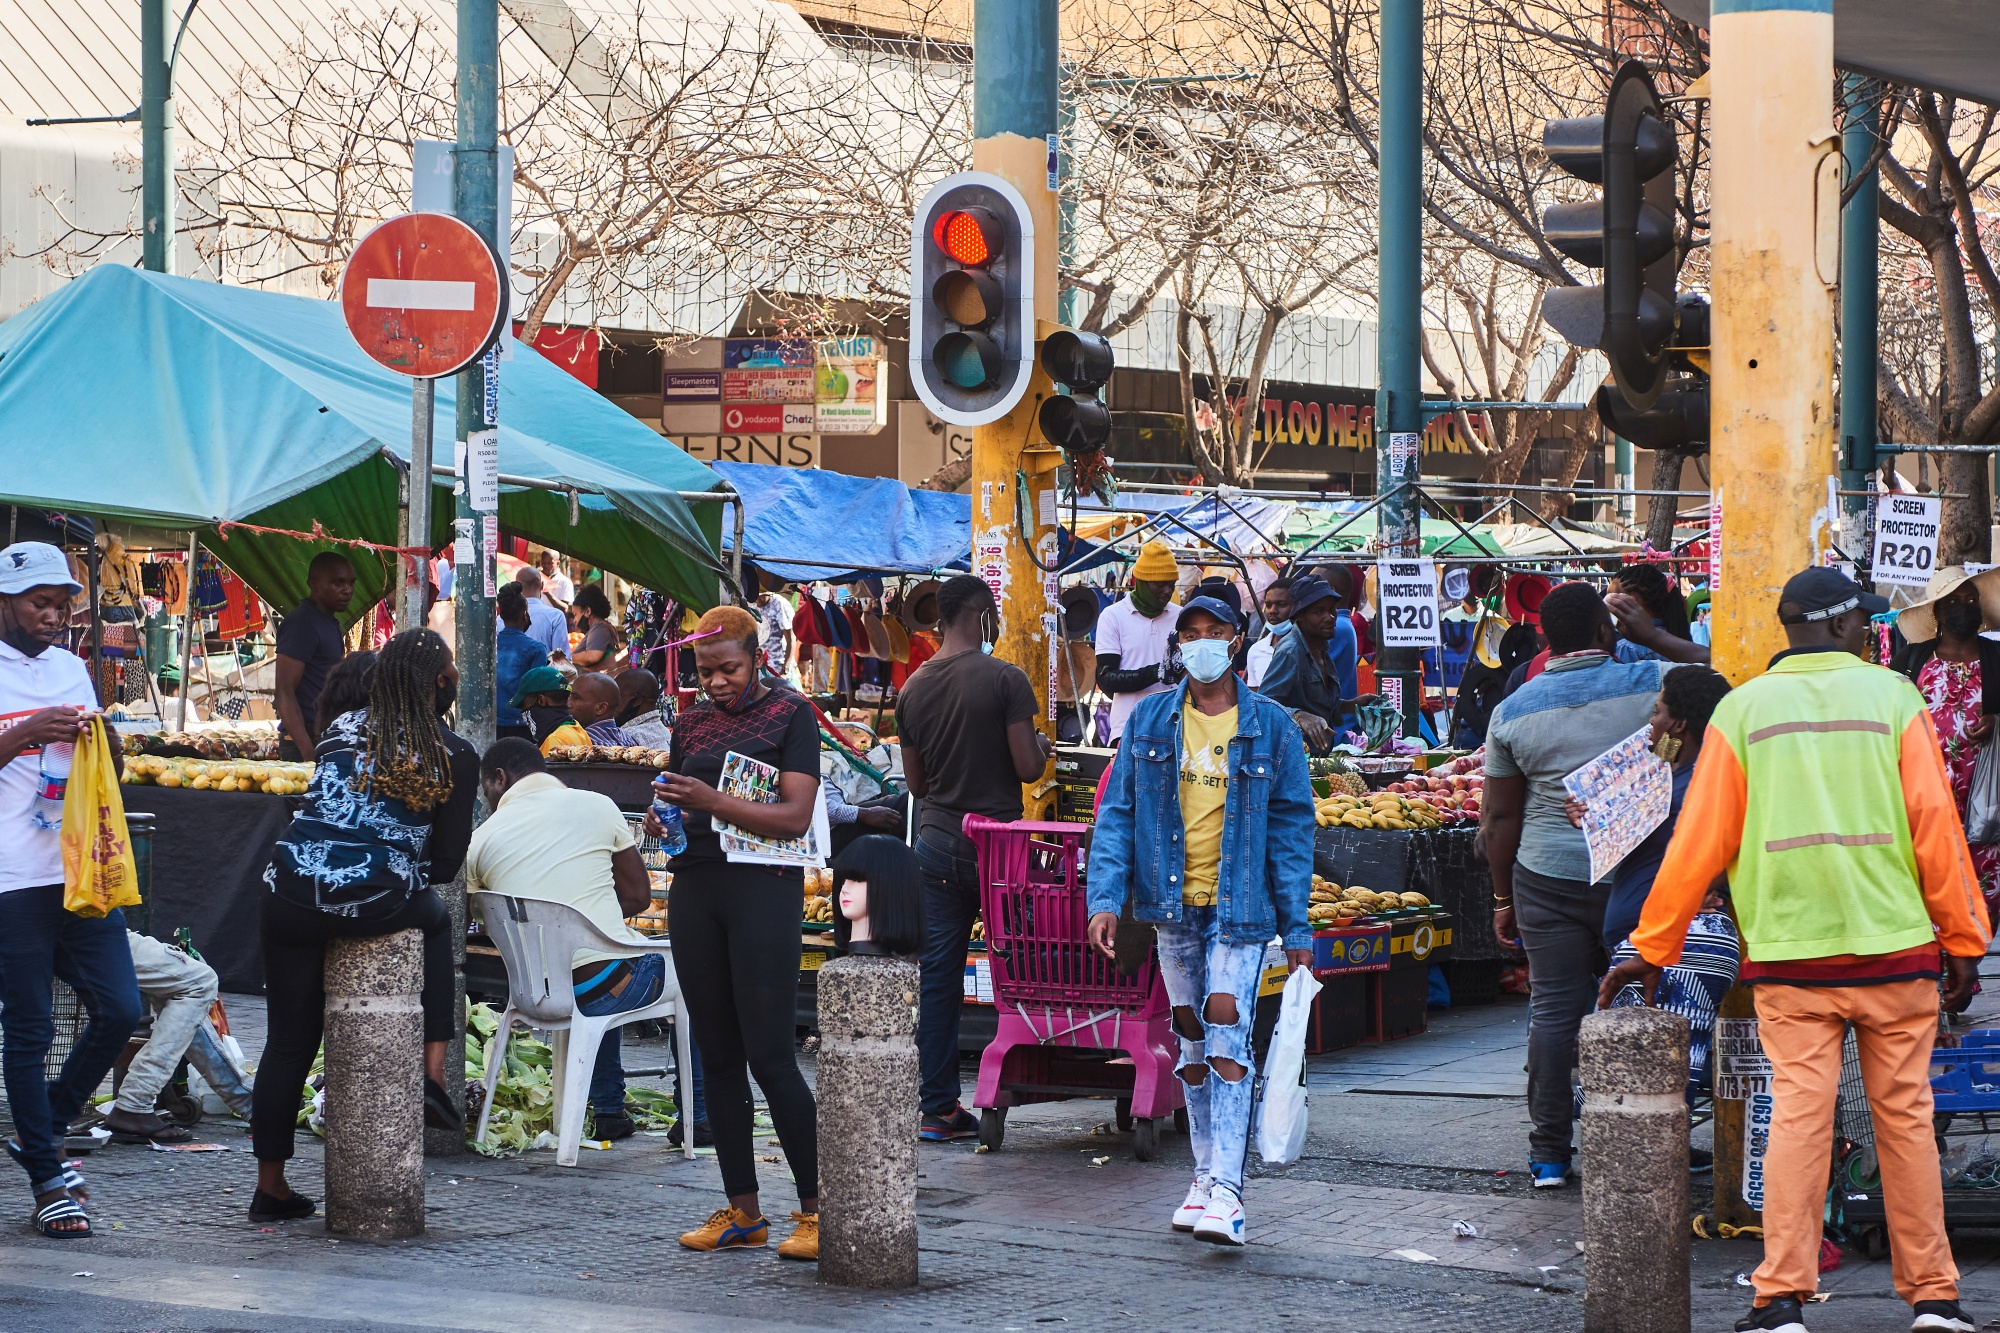 Shoppers walk through a market in&nbsp;Pretoria, South Africa.